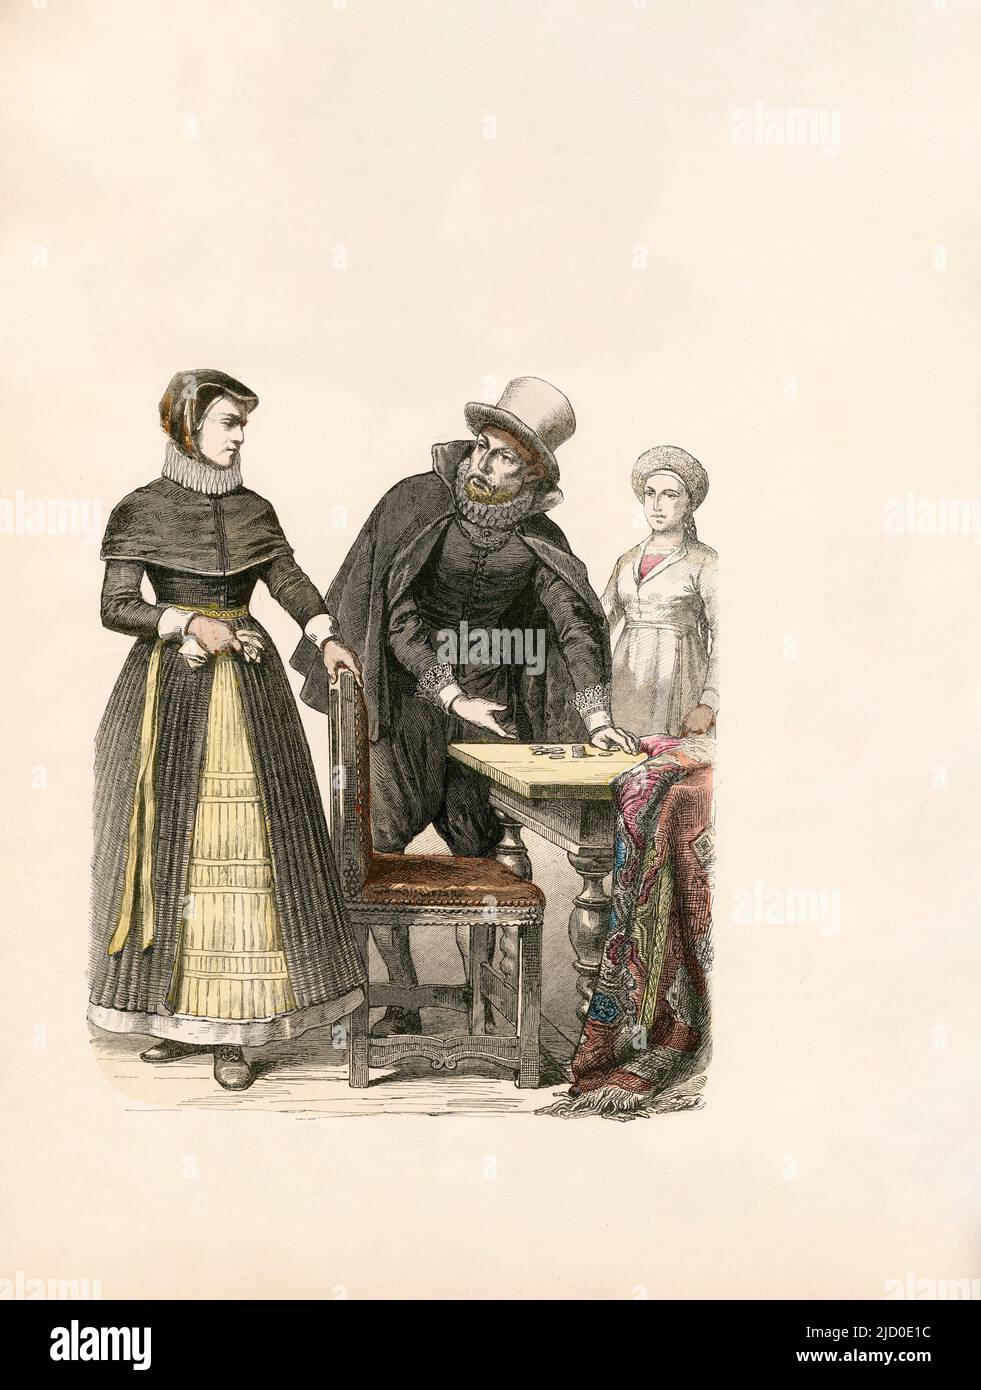 Townswoman, Merchant, Denmark, First Third of the 17th Century, Illustration, The History of Costume, Braun & Schneider, Munich, Germany, 1861-1880 Stock Photo